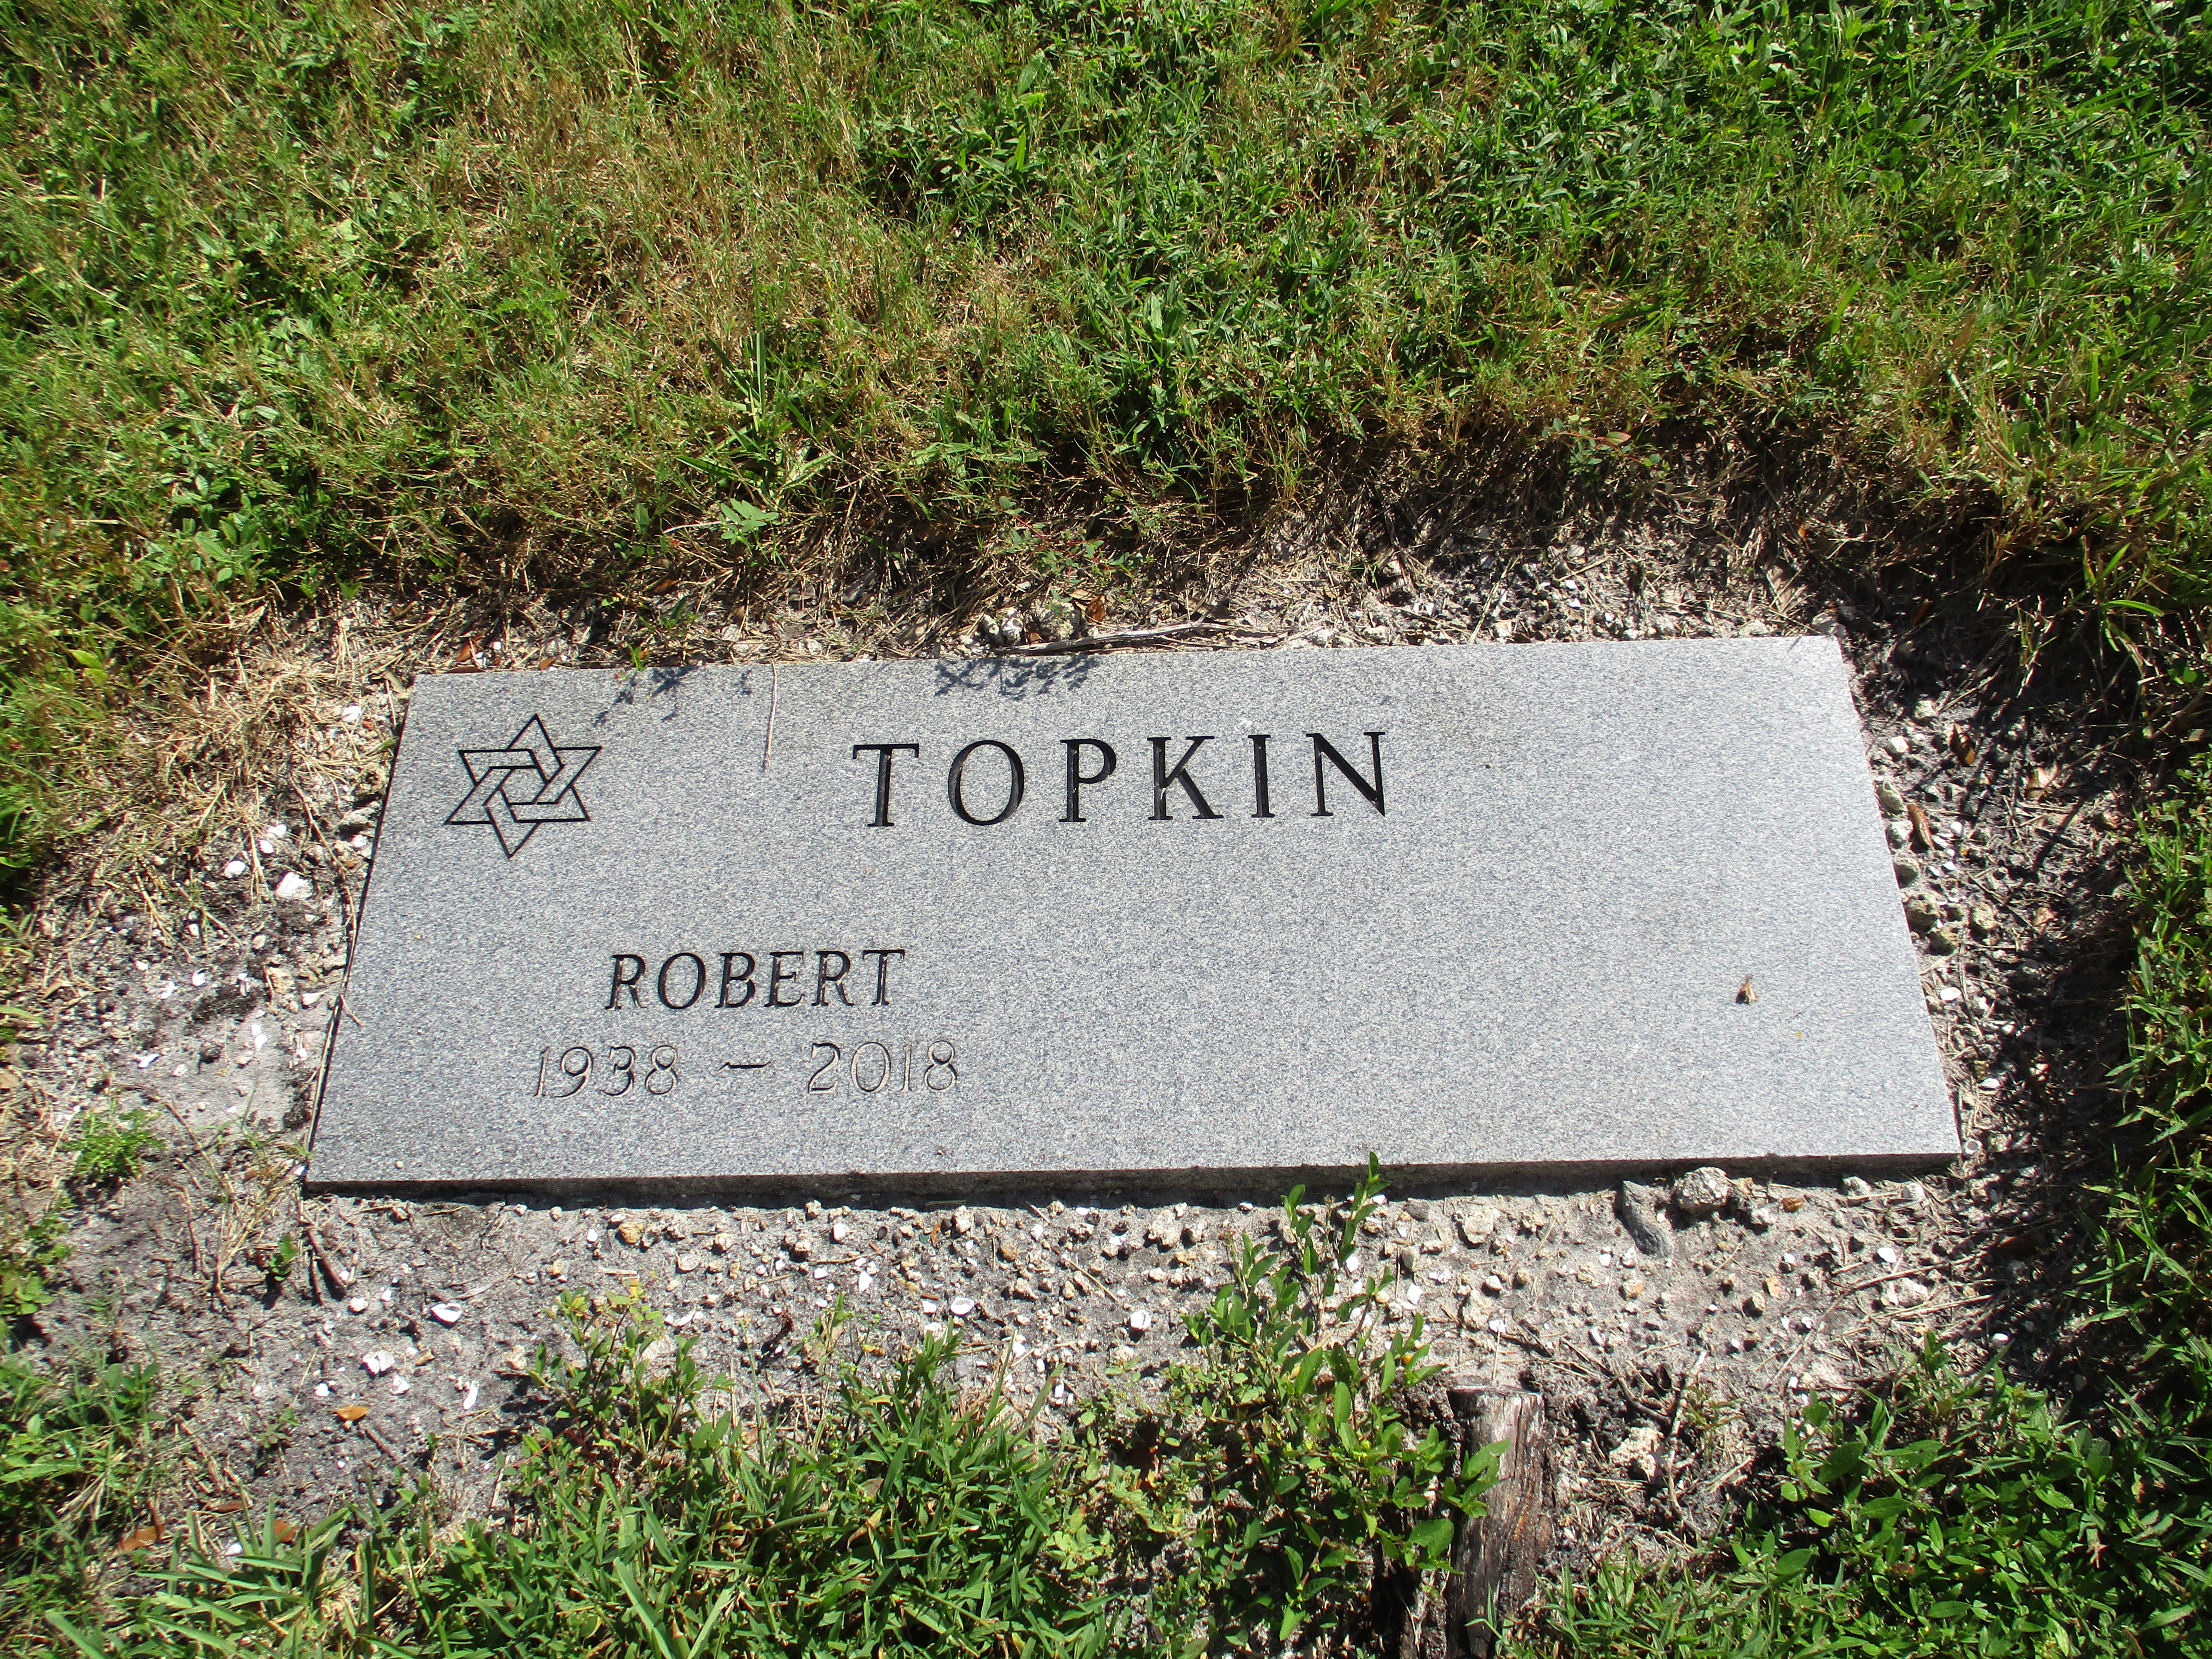 Robert Topkin